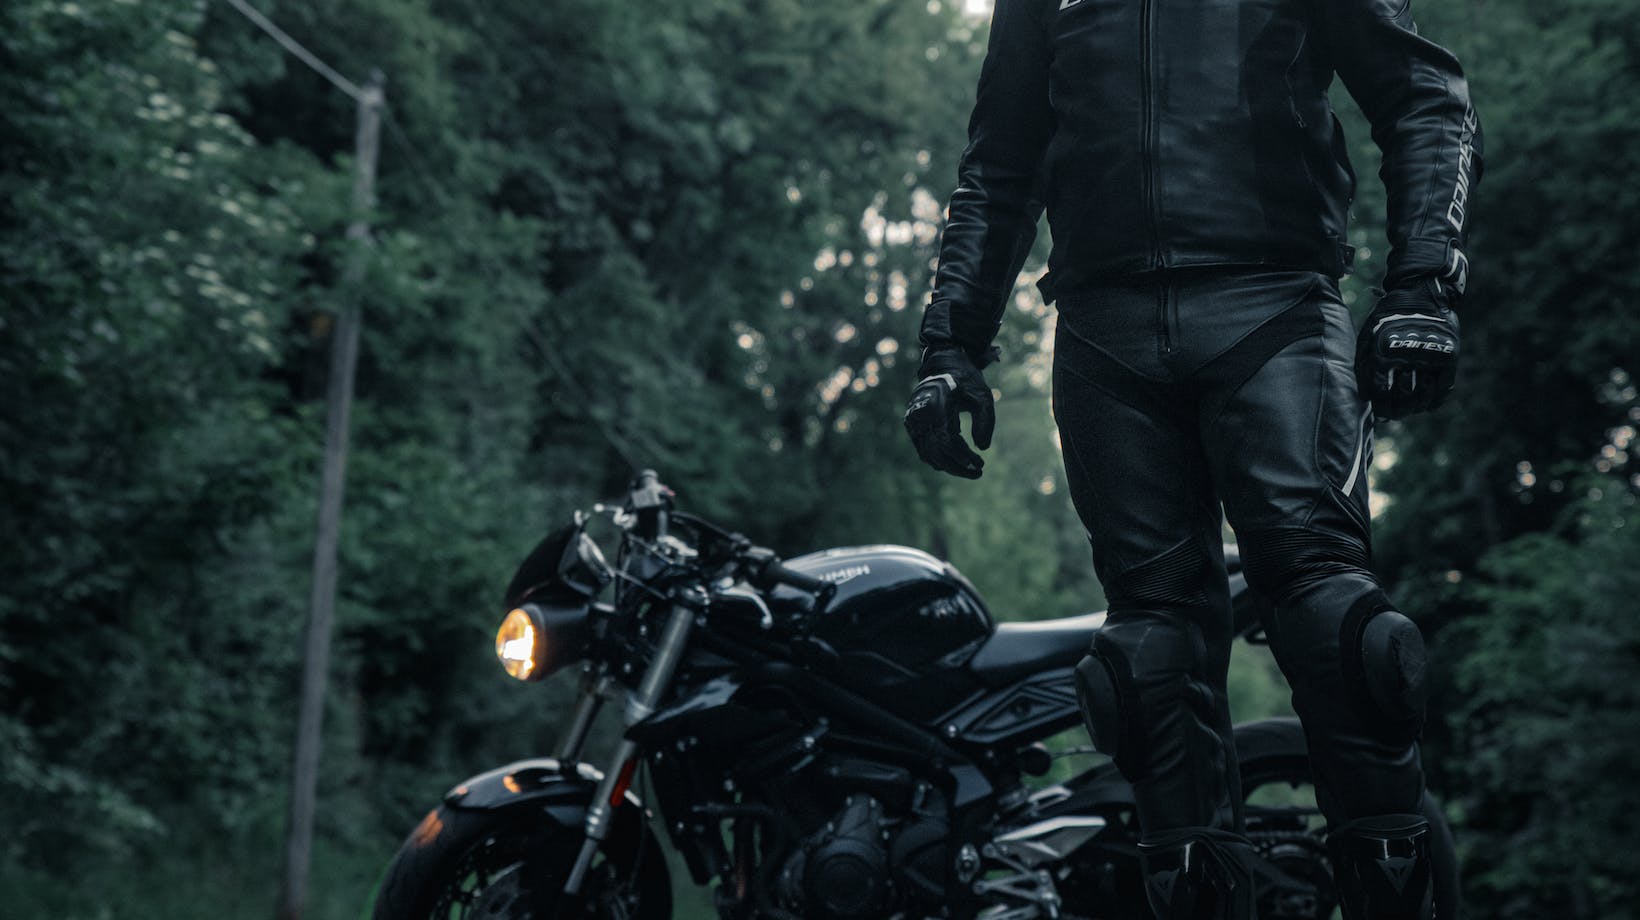 honda crosstourer motorcycle